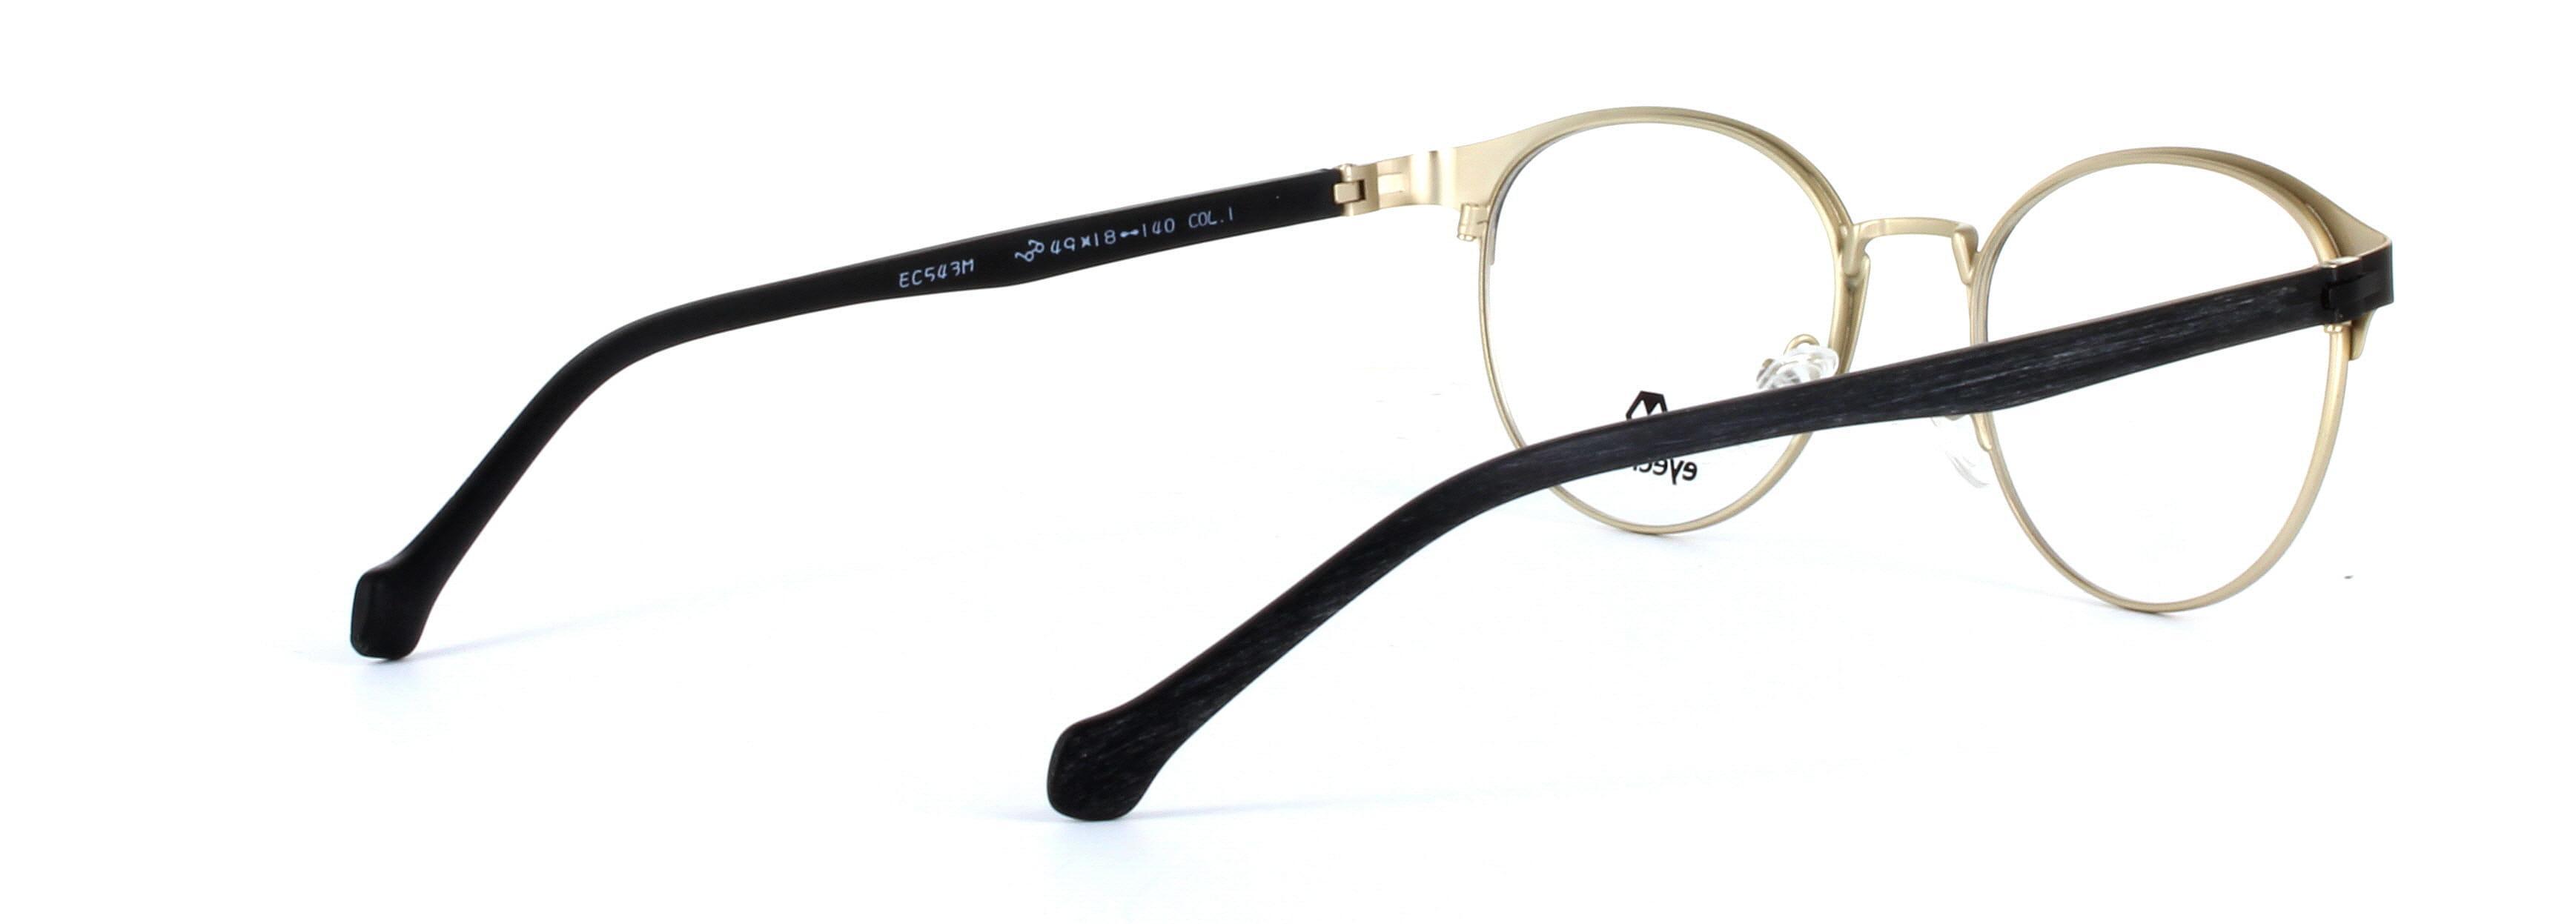 Eyecroxx 543 Black Full Rim Round Metal Glasses - Image View 4